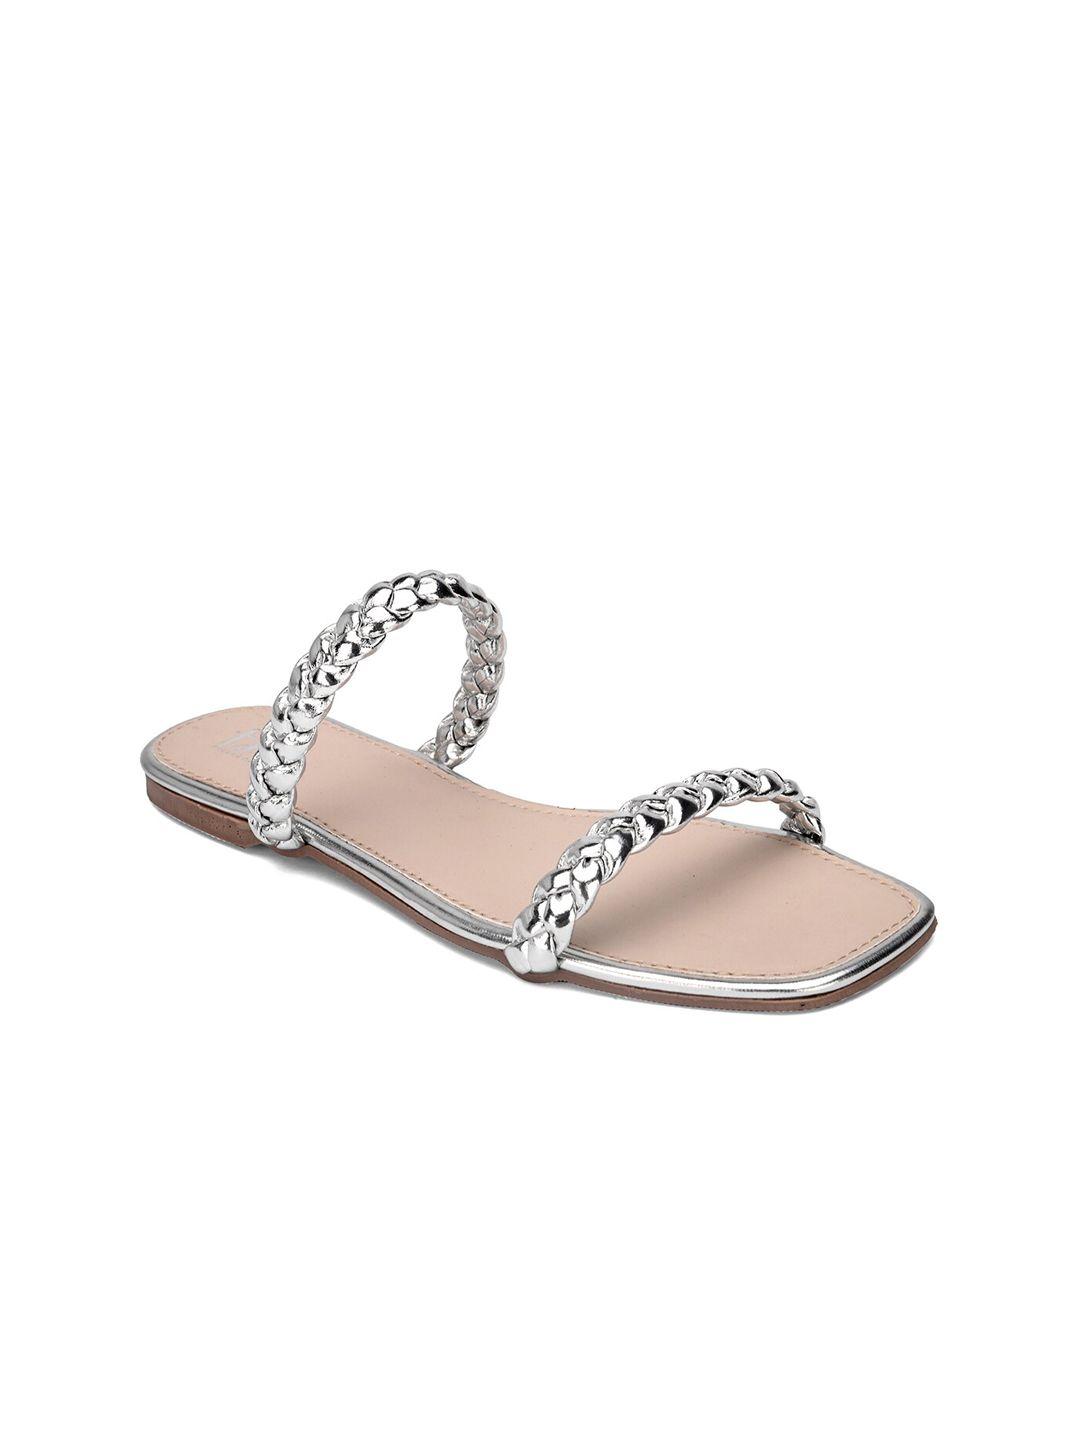 hydes n hues women silver-toned printed open toe flats